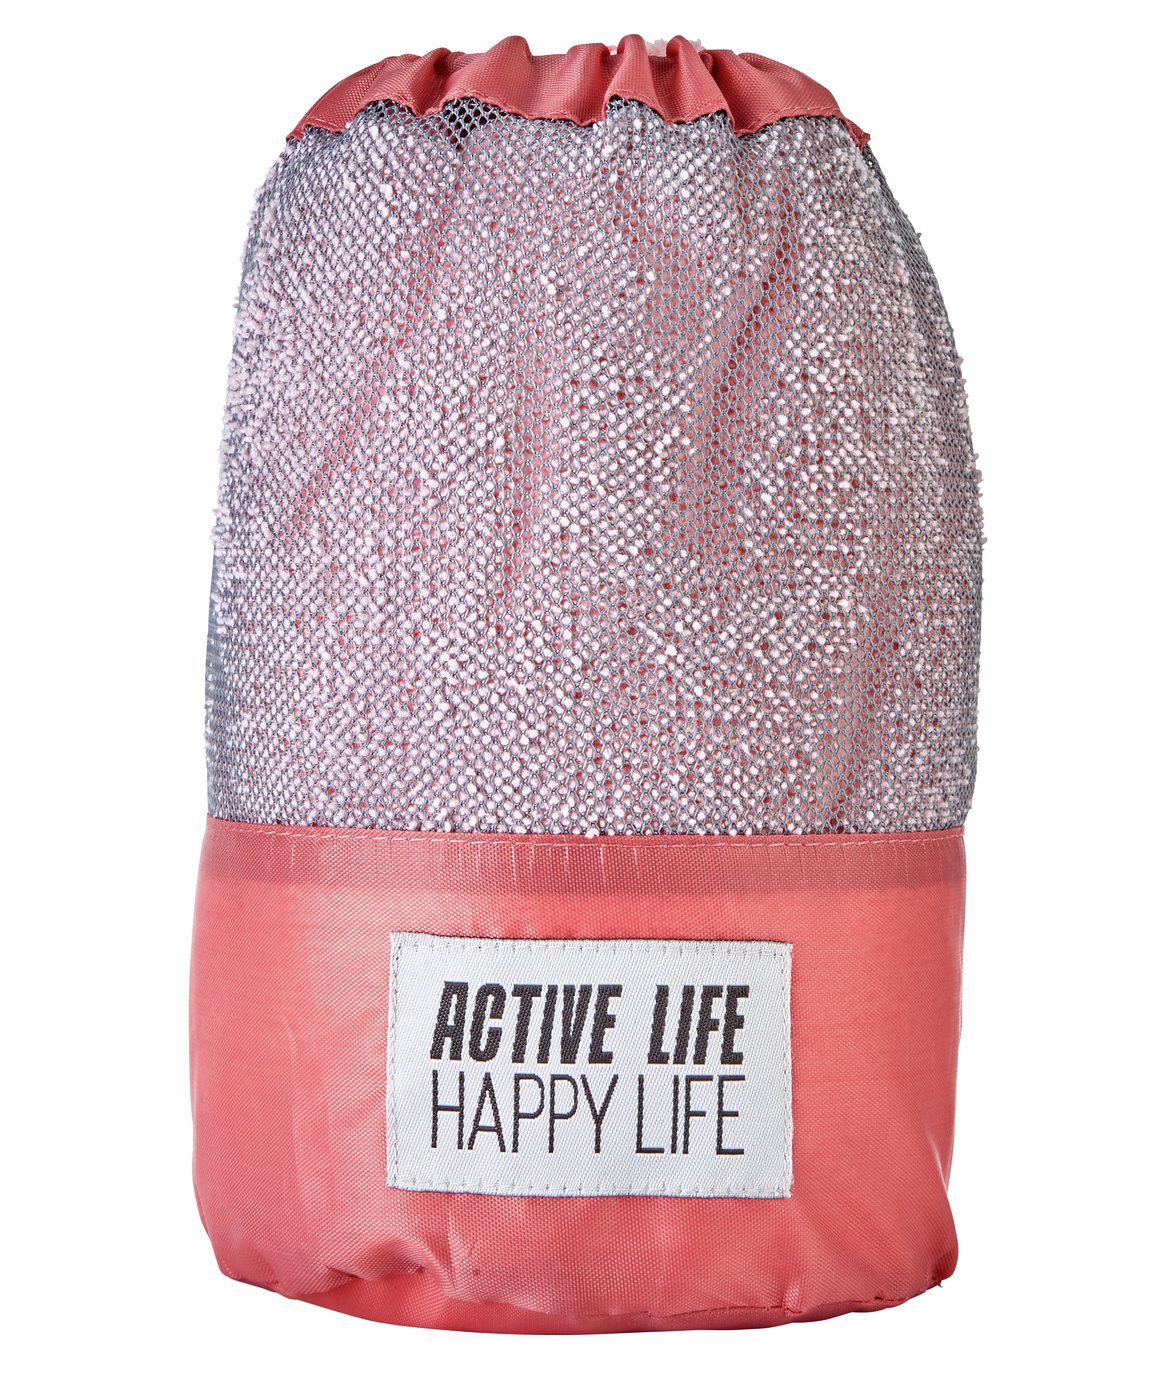 Active Life Happy Life Sports Towel - Pink